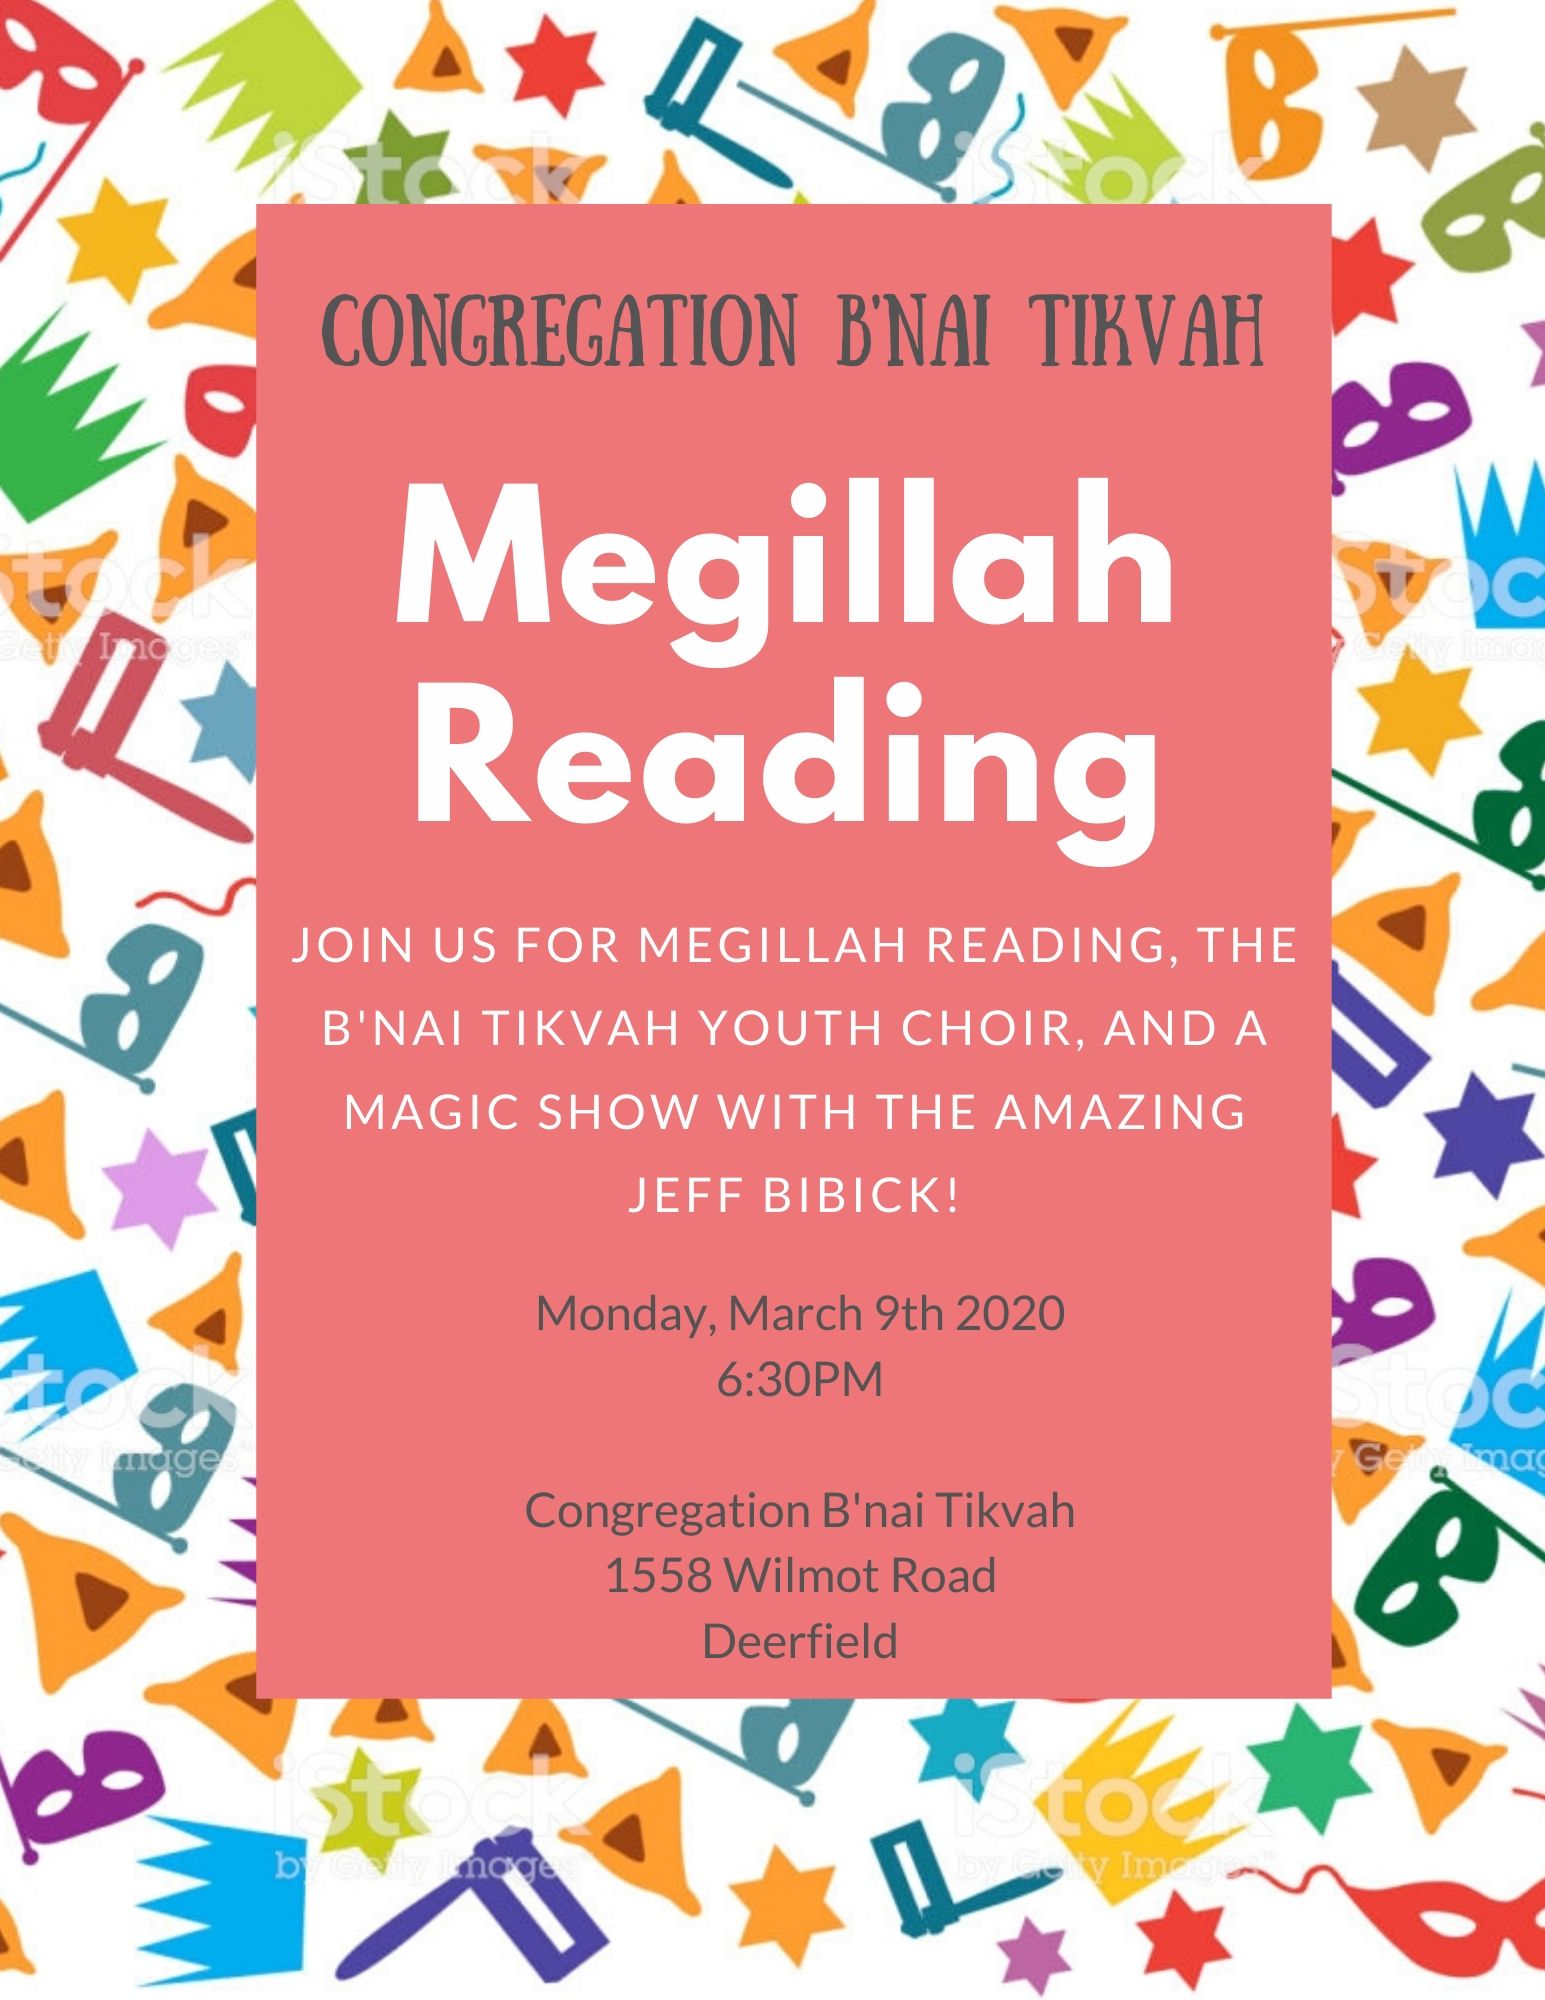 Megillah Reading